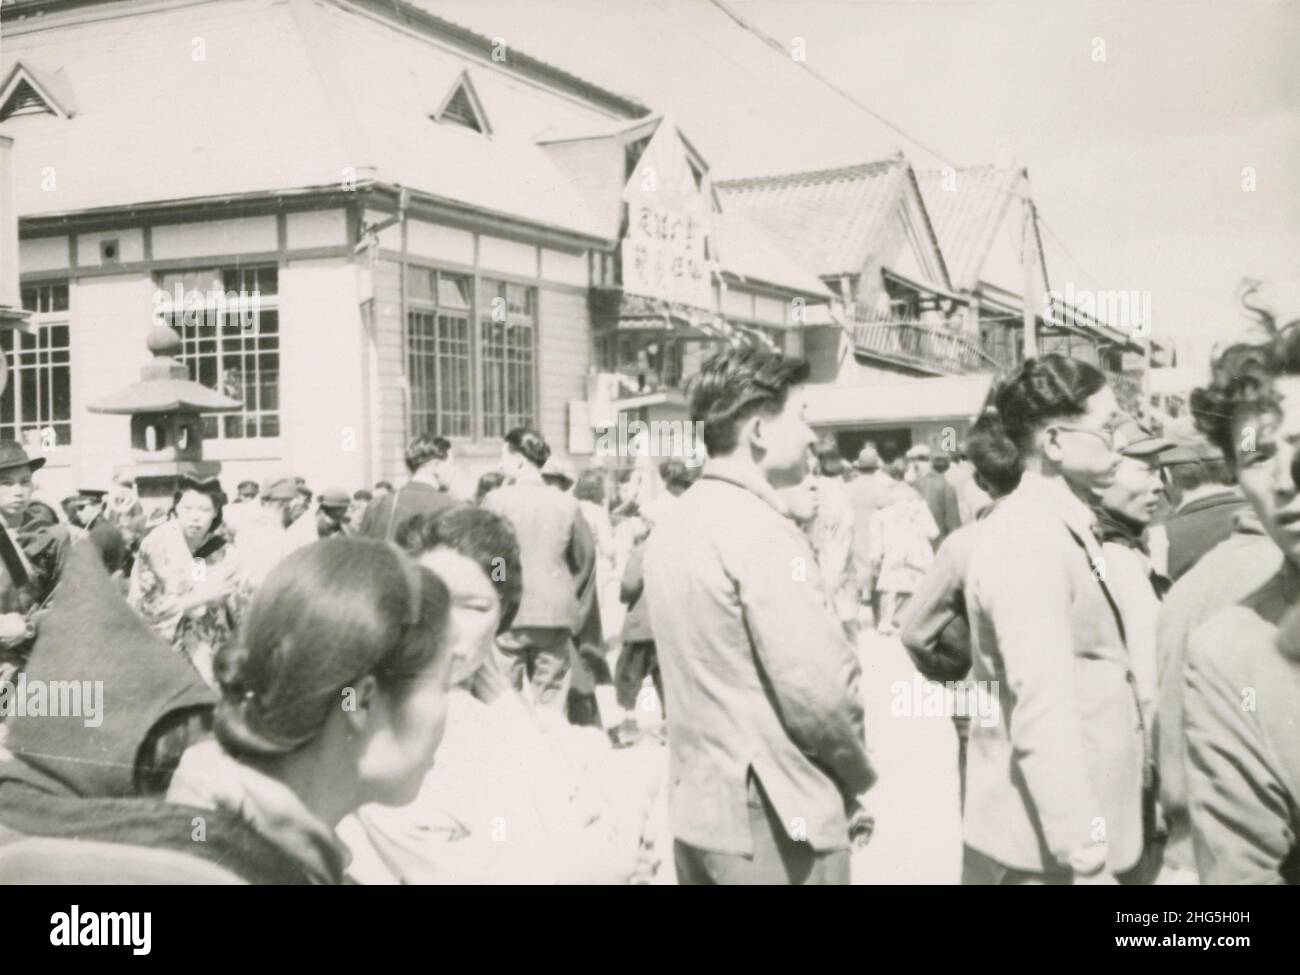 Antique circa 1950 photograph, street scene in Japan. Exact location unknown. SOURCE: ORIGINAL PHOTOGRAPH Stock Photo